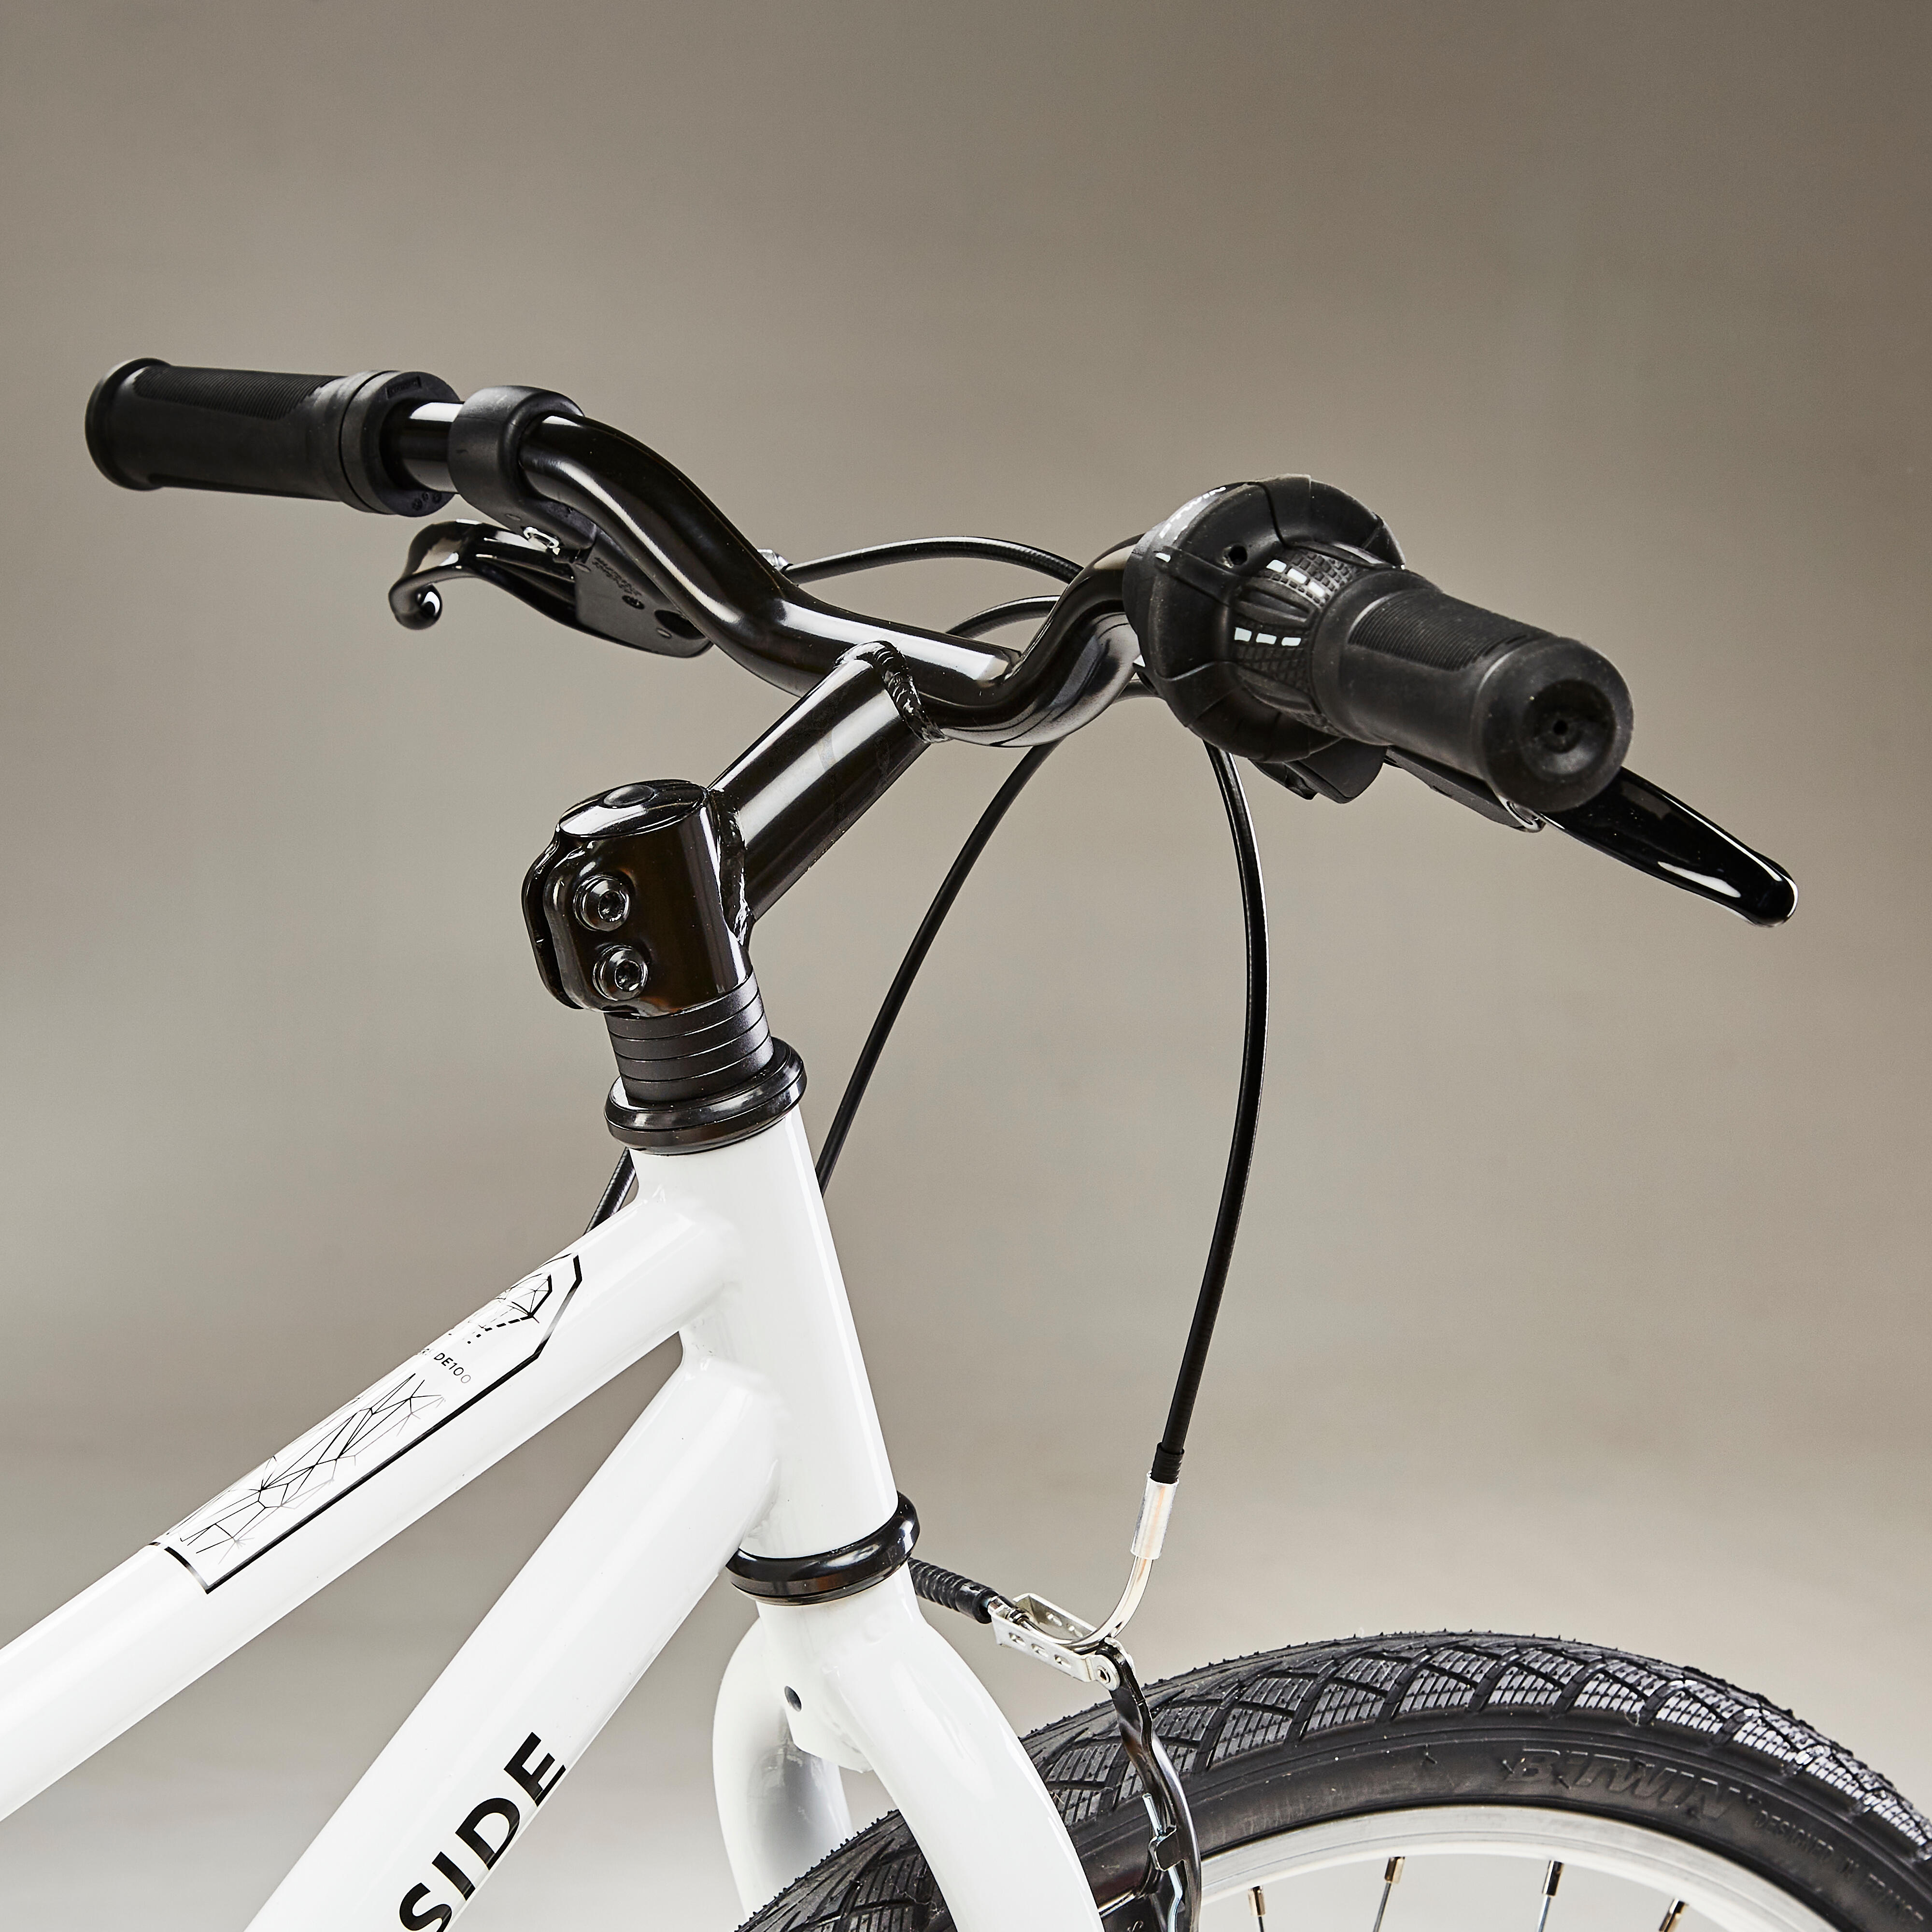 Vélo hybride de 24 po pour enfants - Riverside 100 blanc - BTWIN